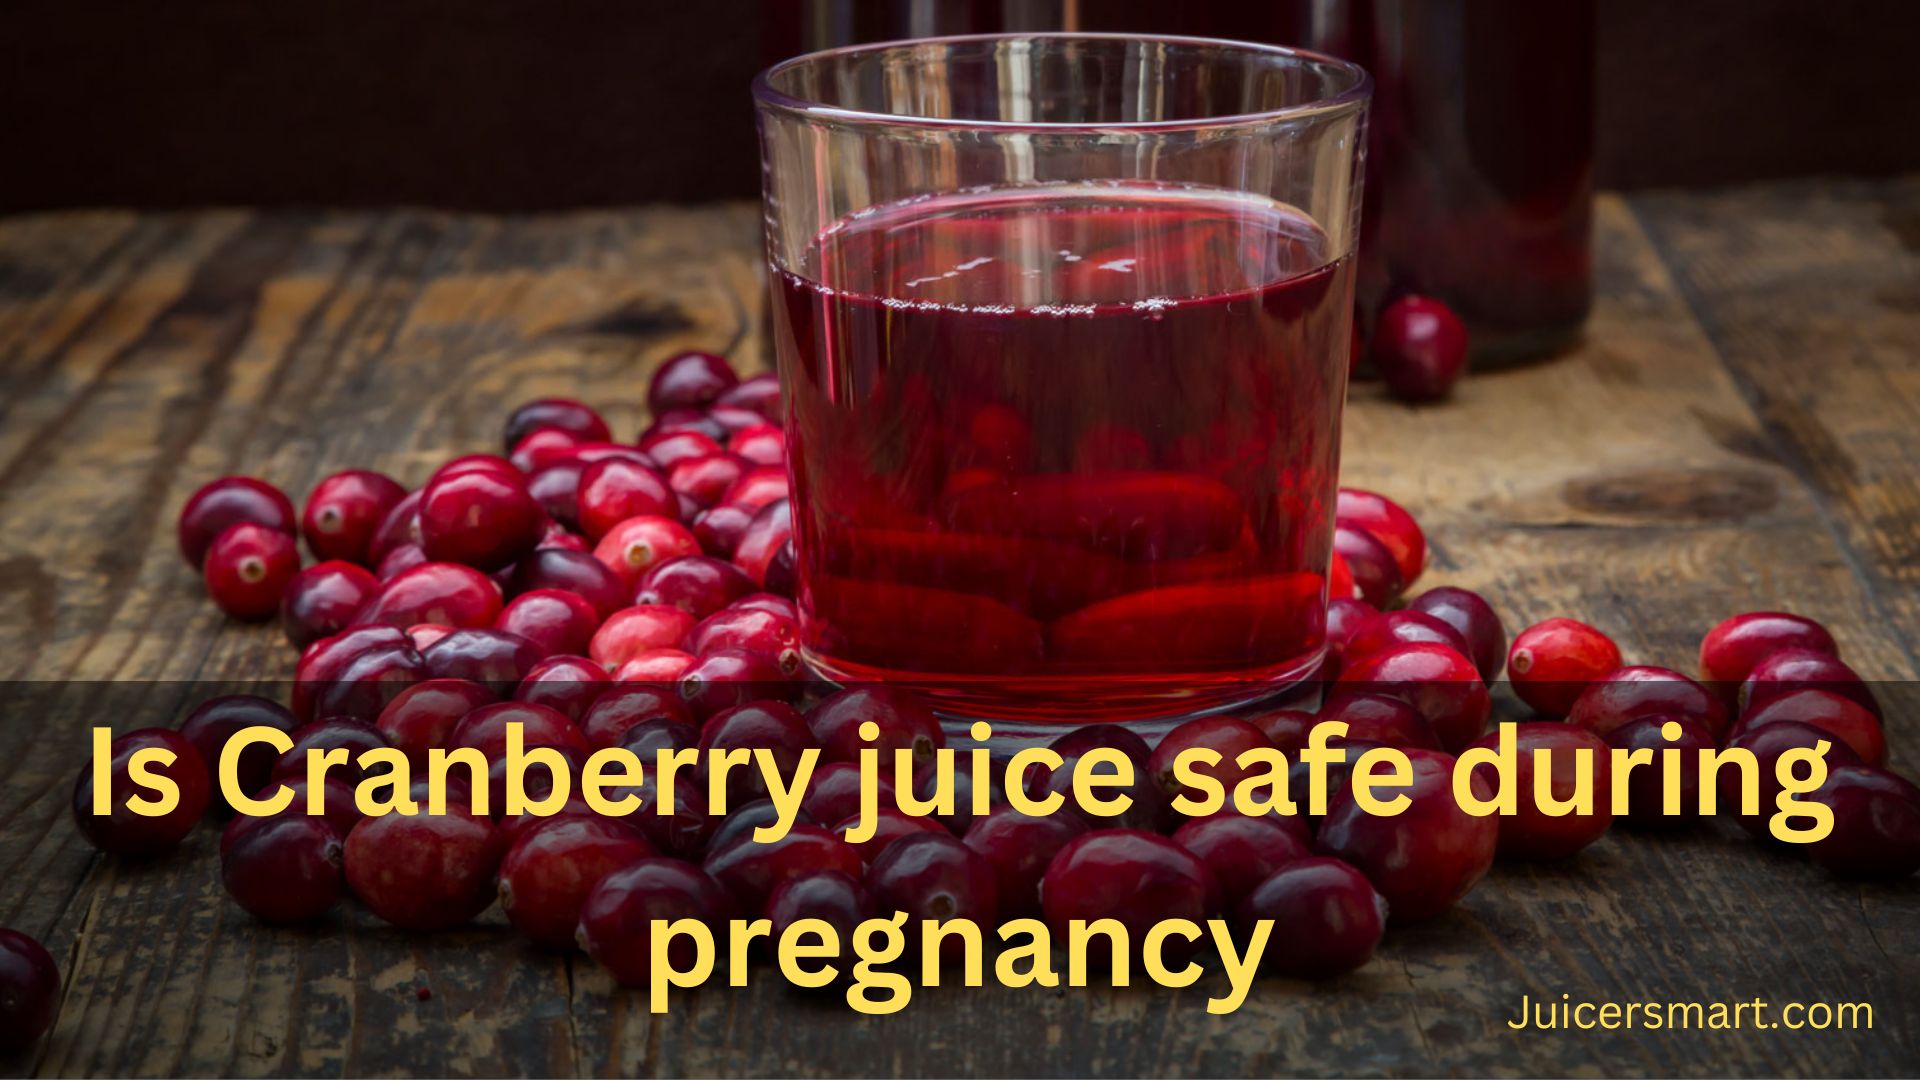 Cranberry juice safe during pregnancy